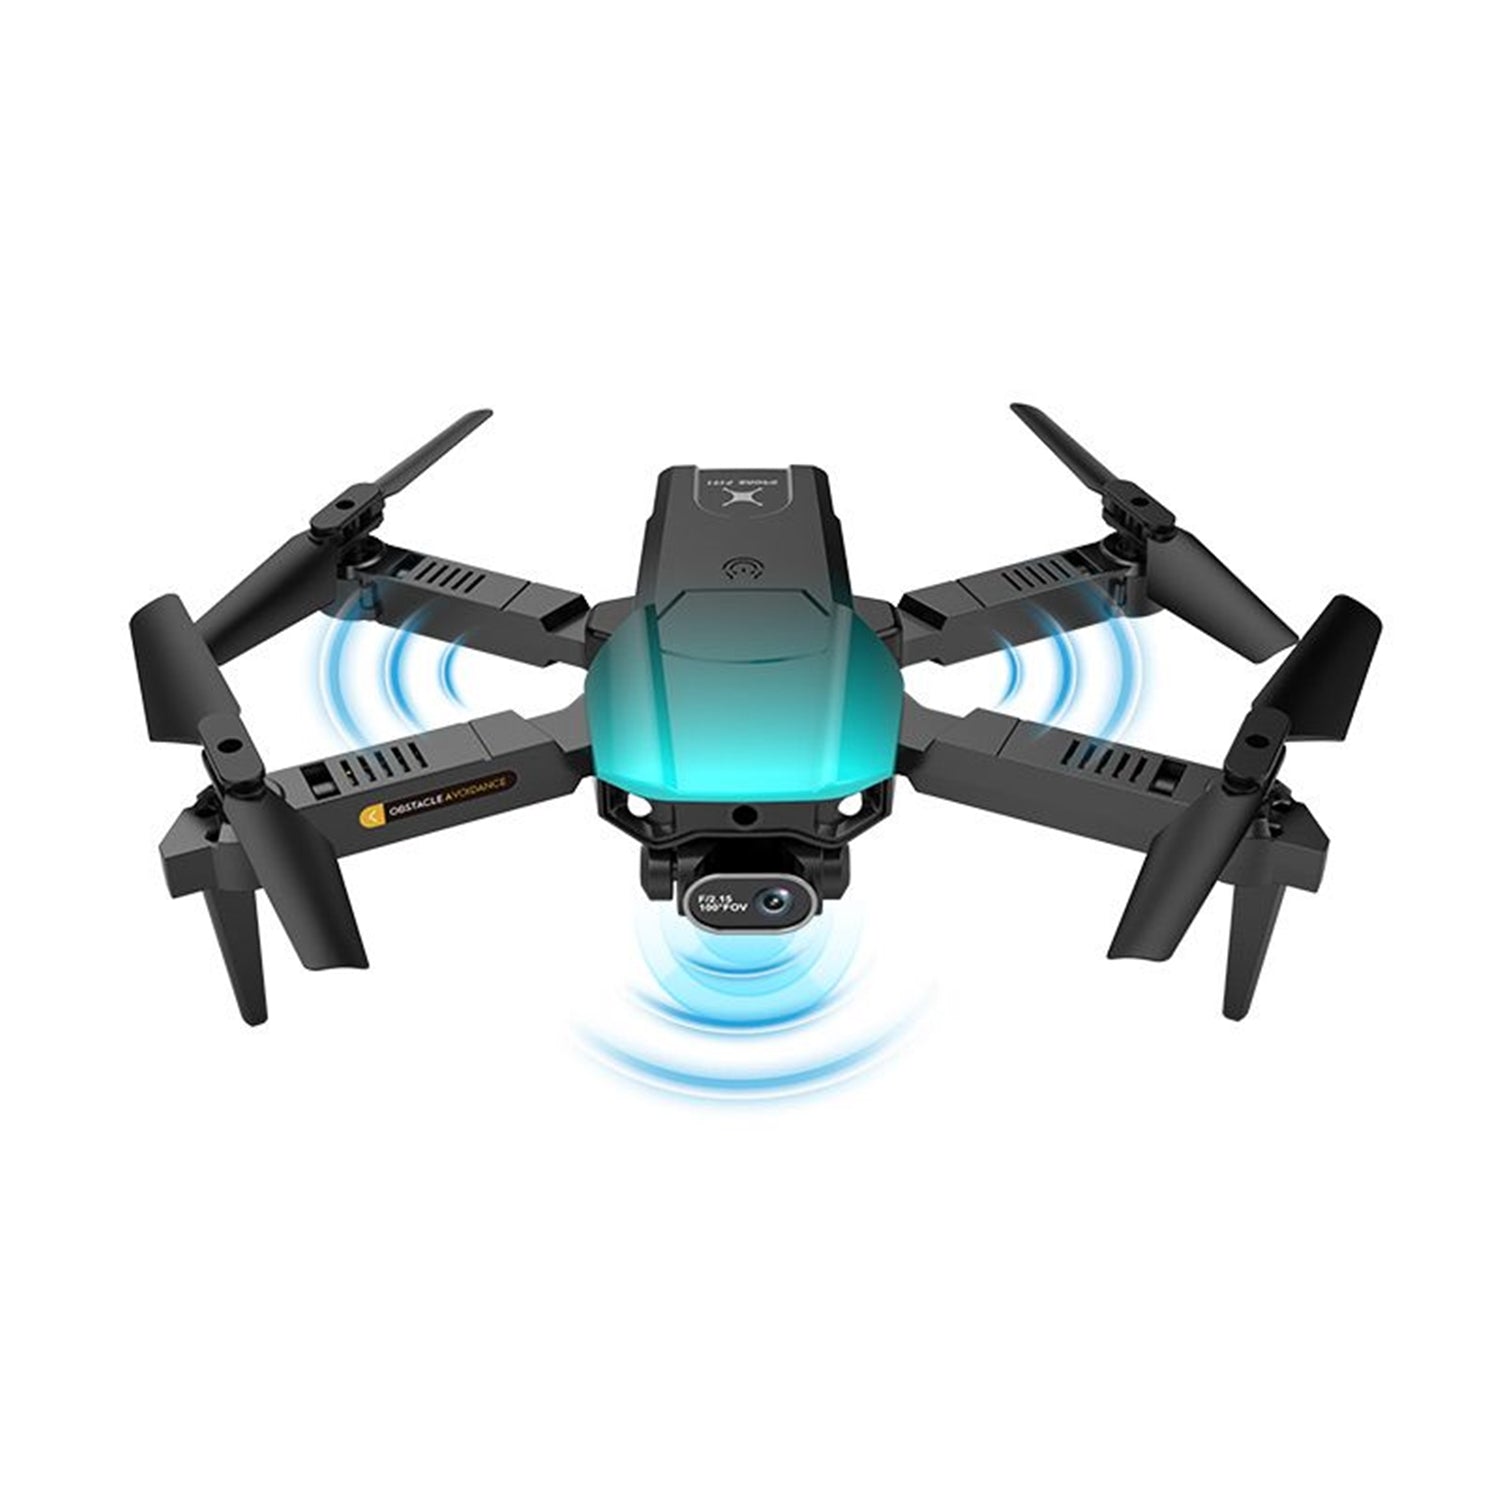 ZFR - Drone avec Double Objectif 4K avec Boite de Rangement et Télécommande, Streaming/Video en Direct, Noir